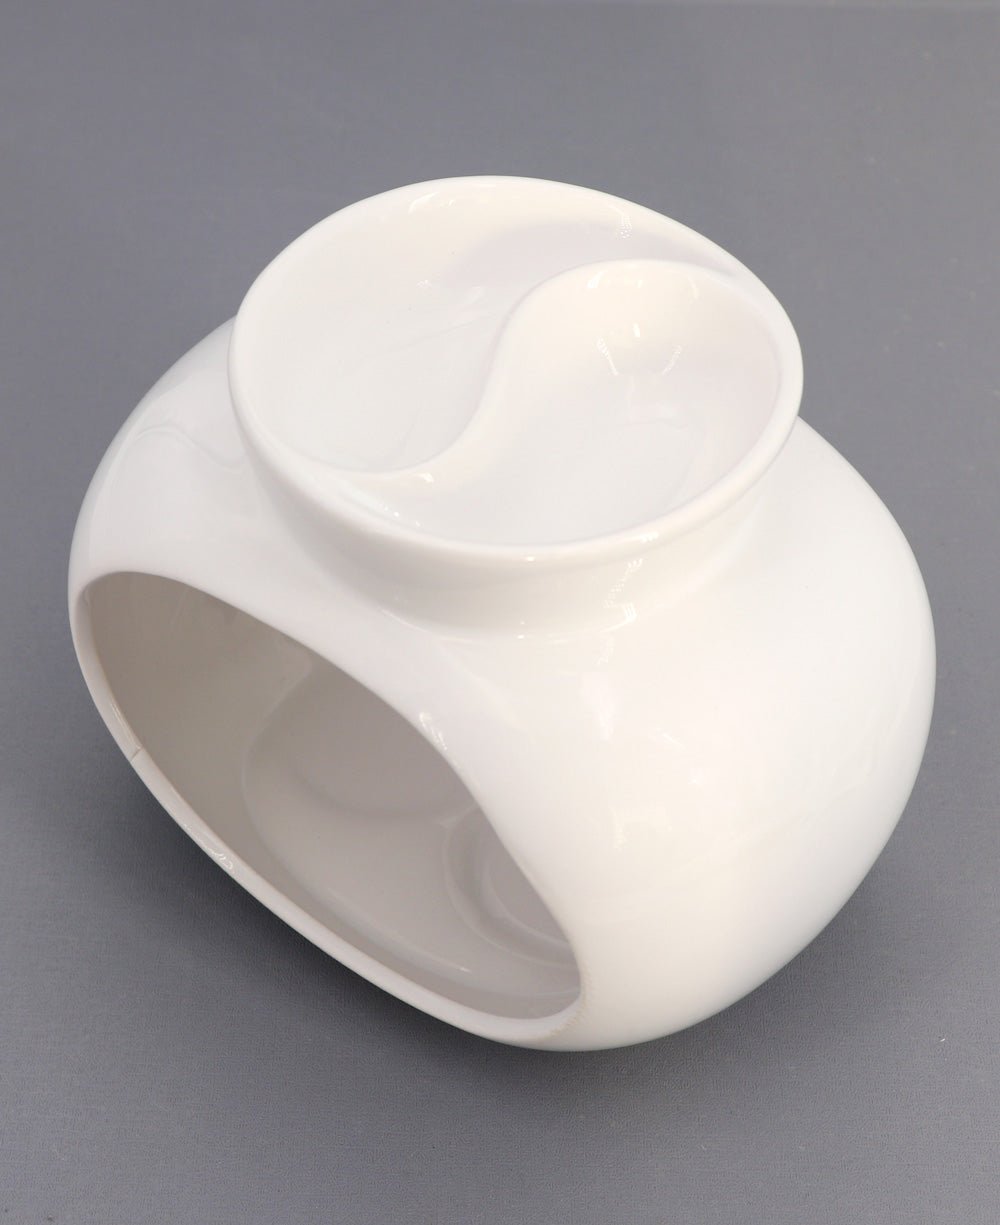 SC Johnson & Son Round White Ceramic Candle Wax Melter Warmer Burner